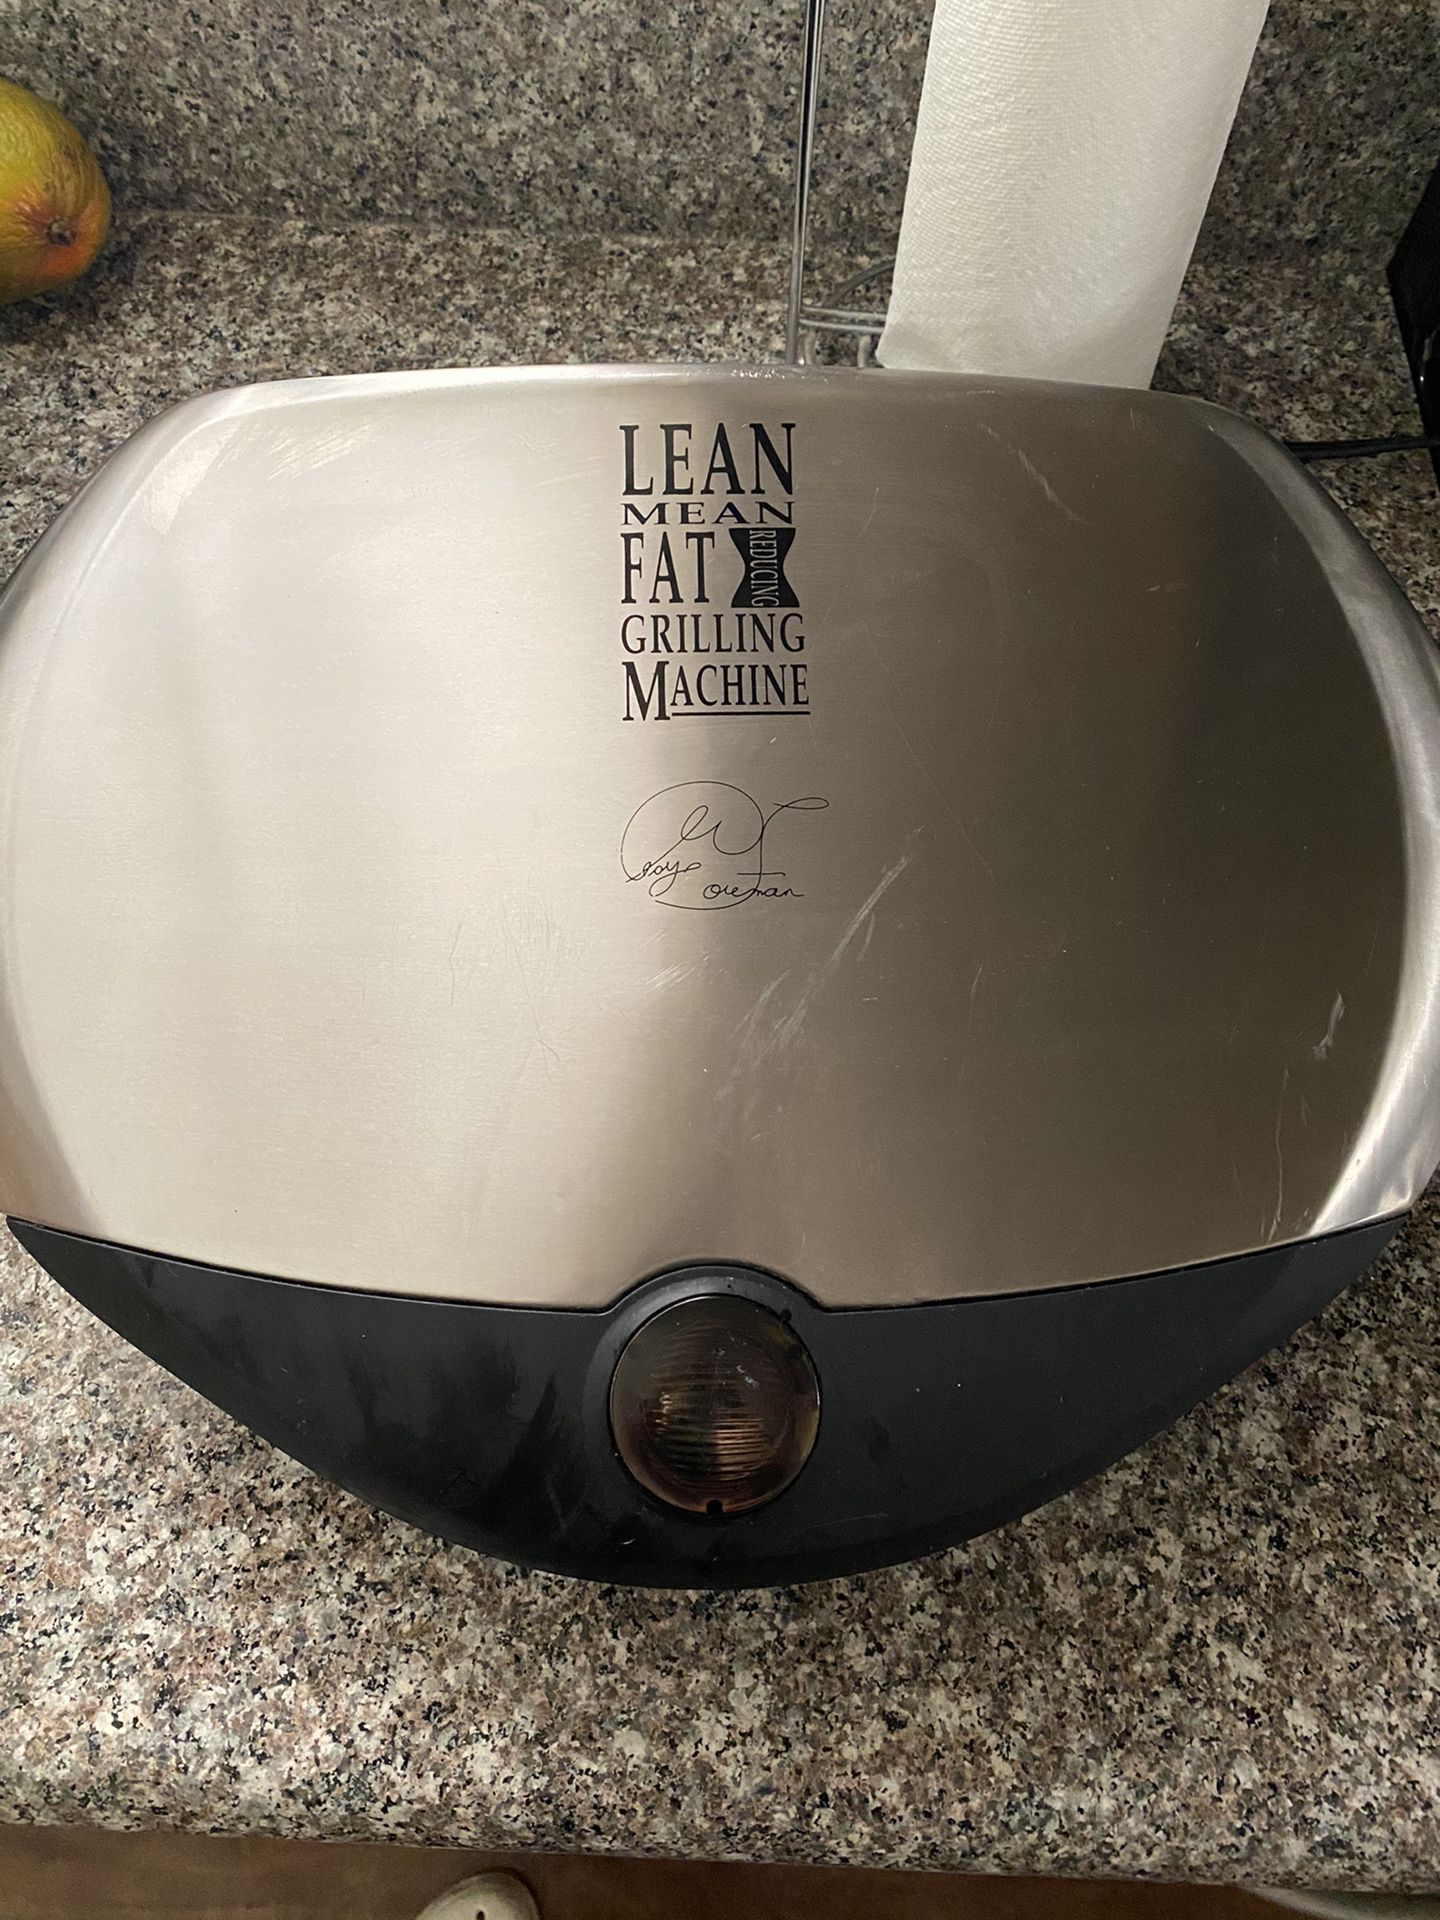 Lean mean fat grilling machine